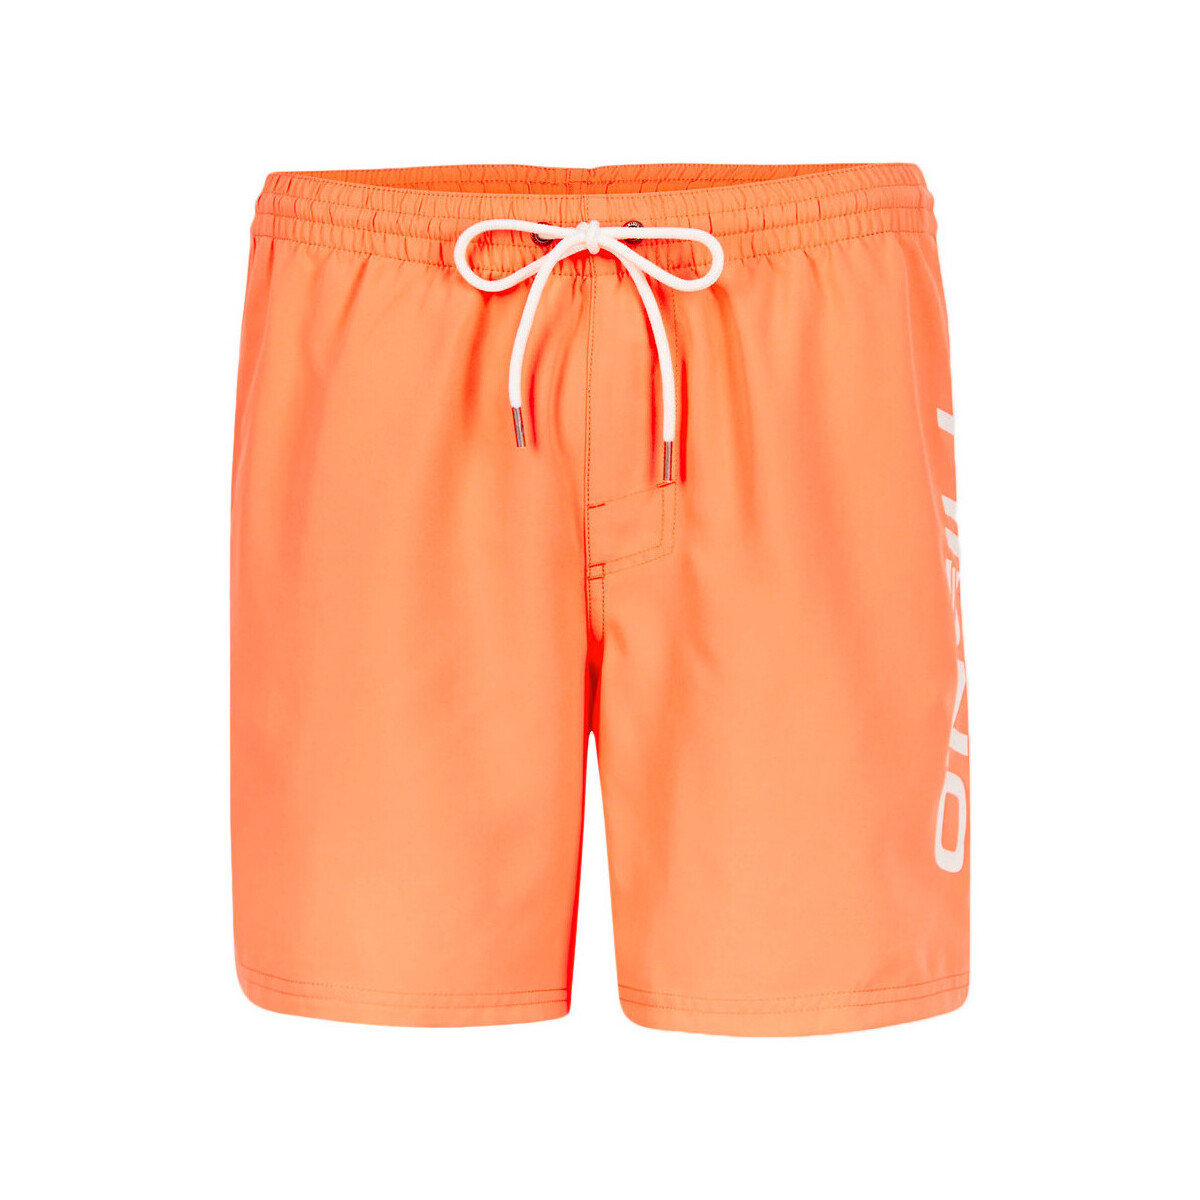 Vêtements Homme Maillots / Shorts de bain O'neill N03202-12517 Orange